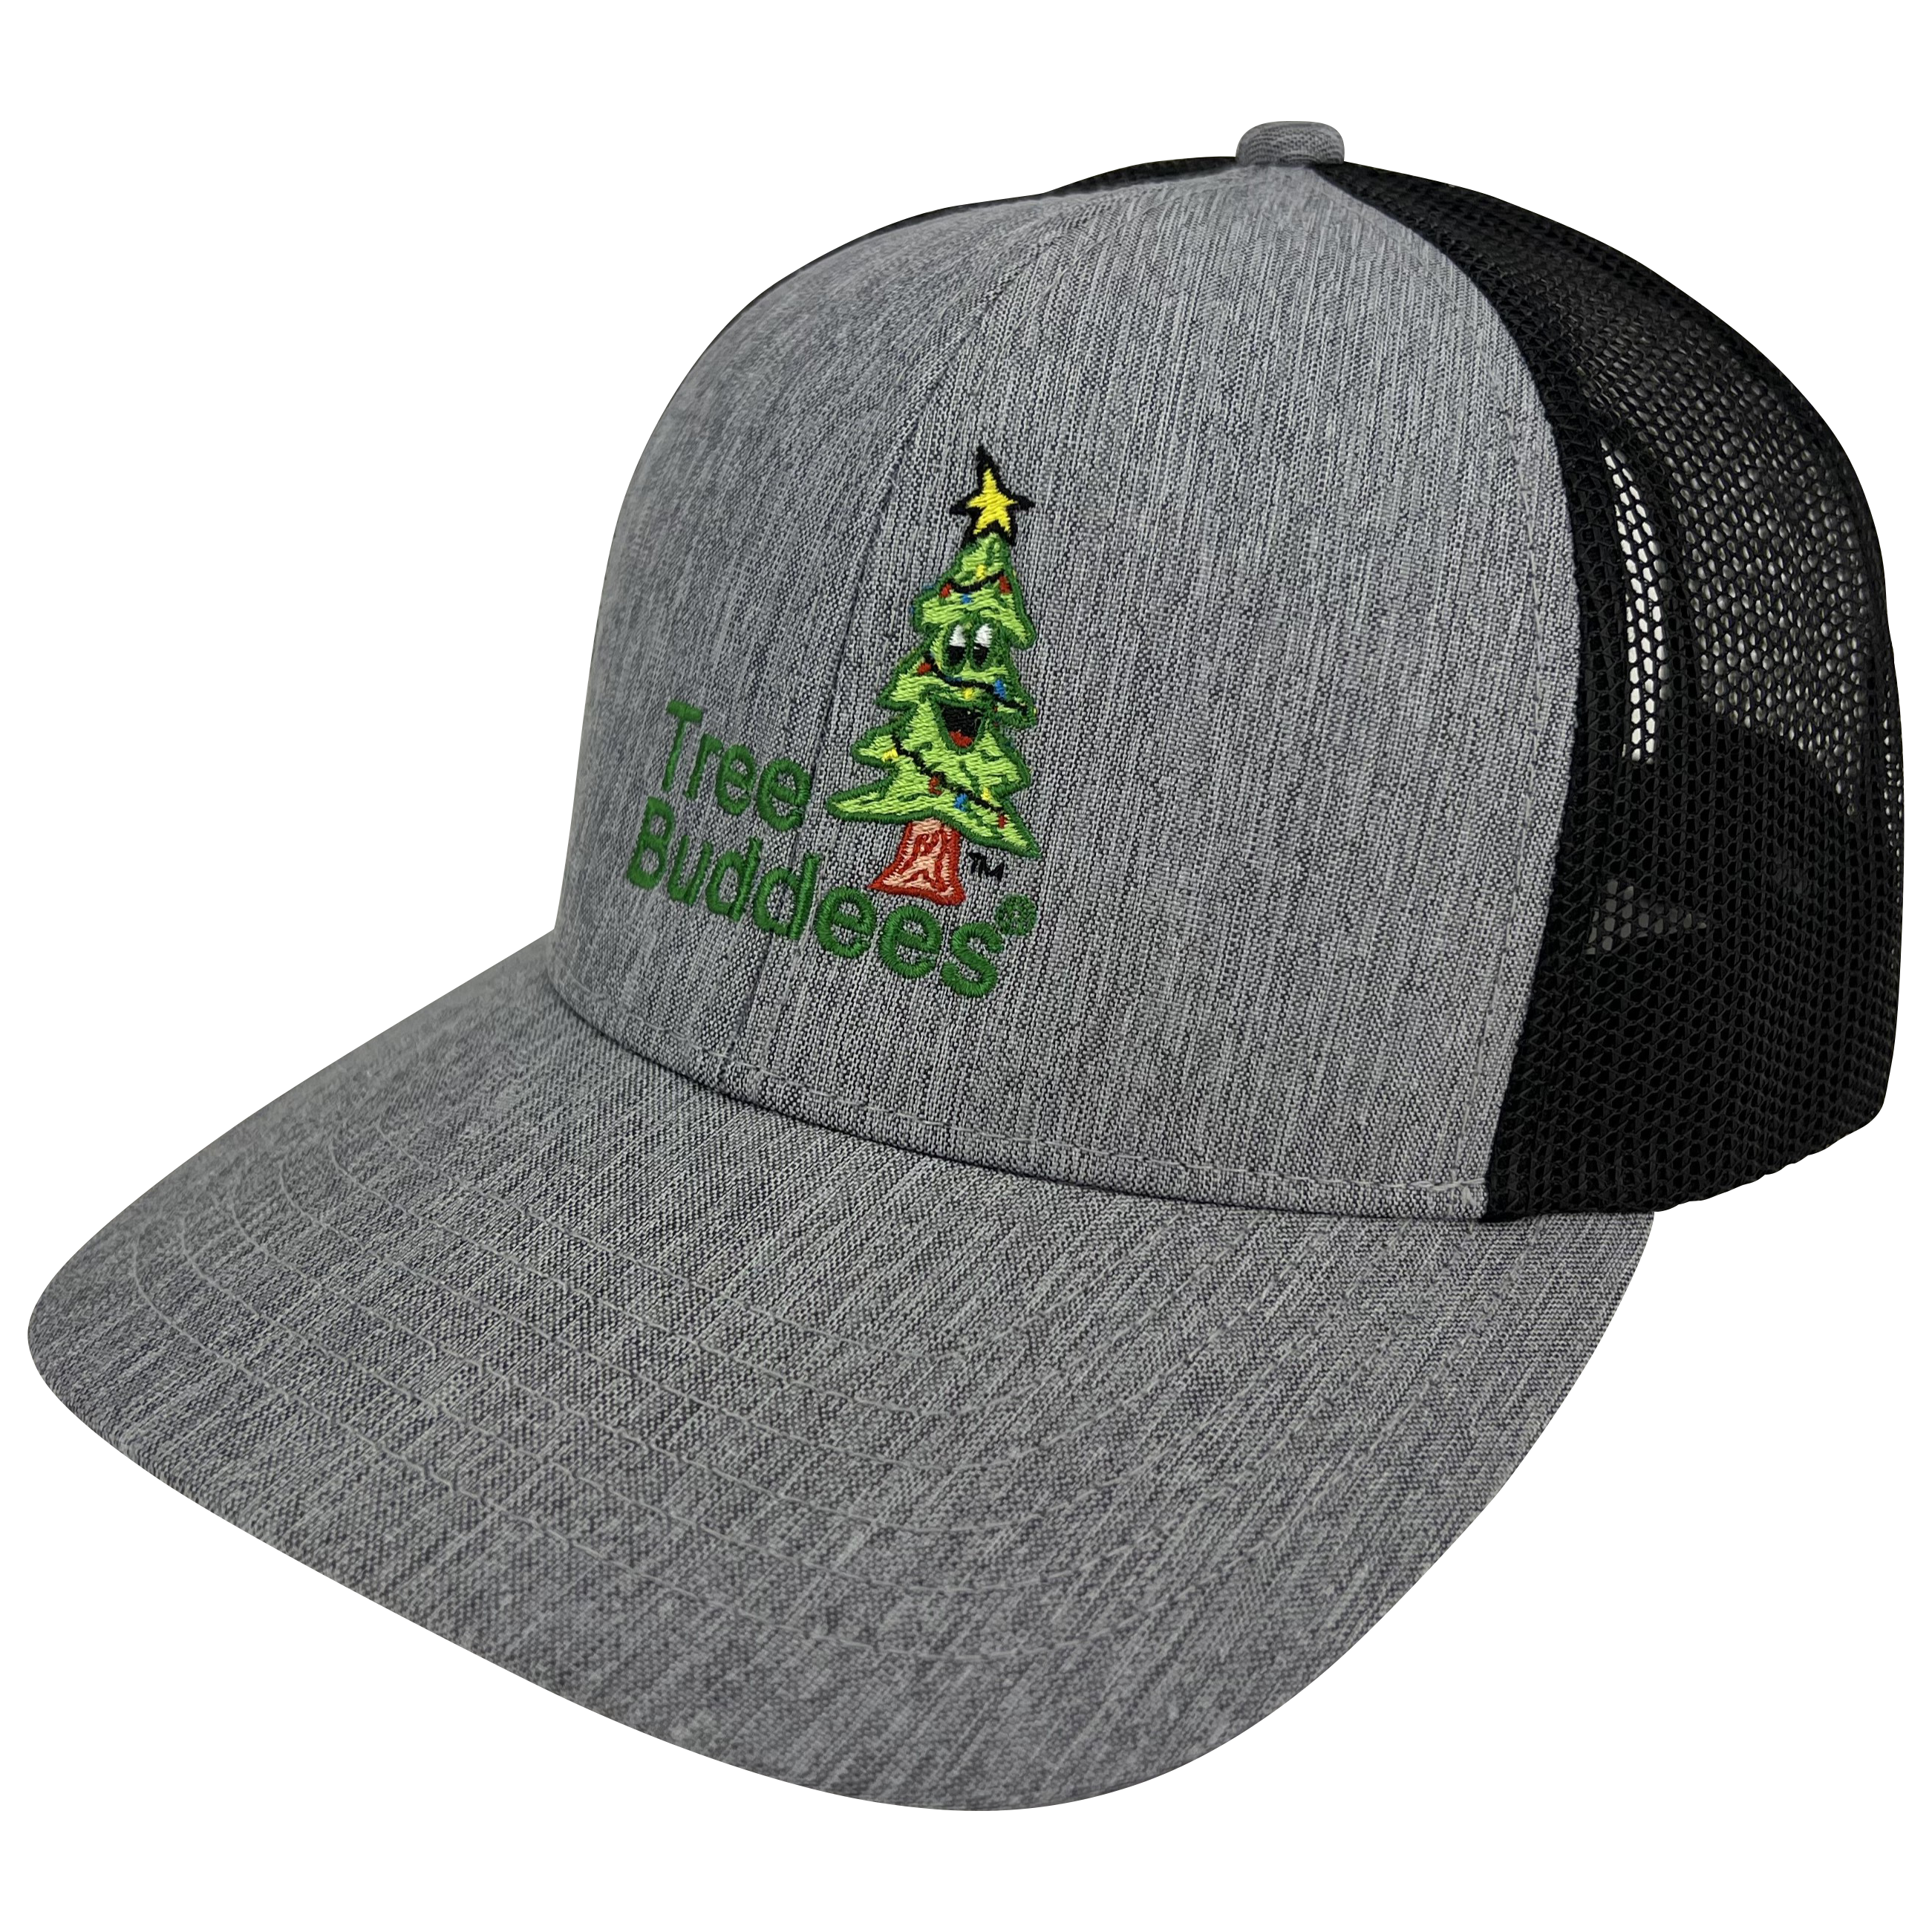 Tree Buddees Embroidered Mesh Snapback Hat - Black & Grey